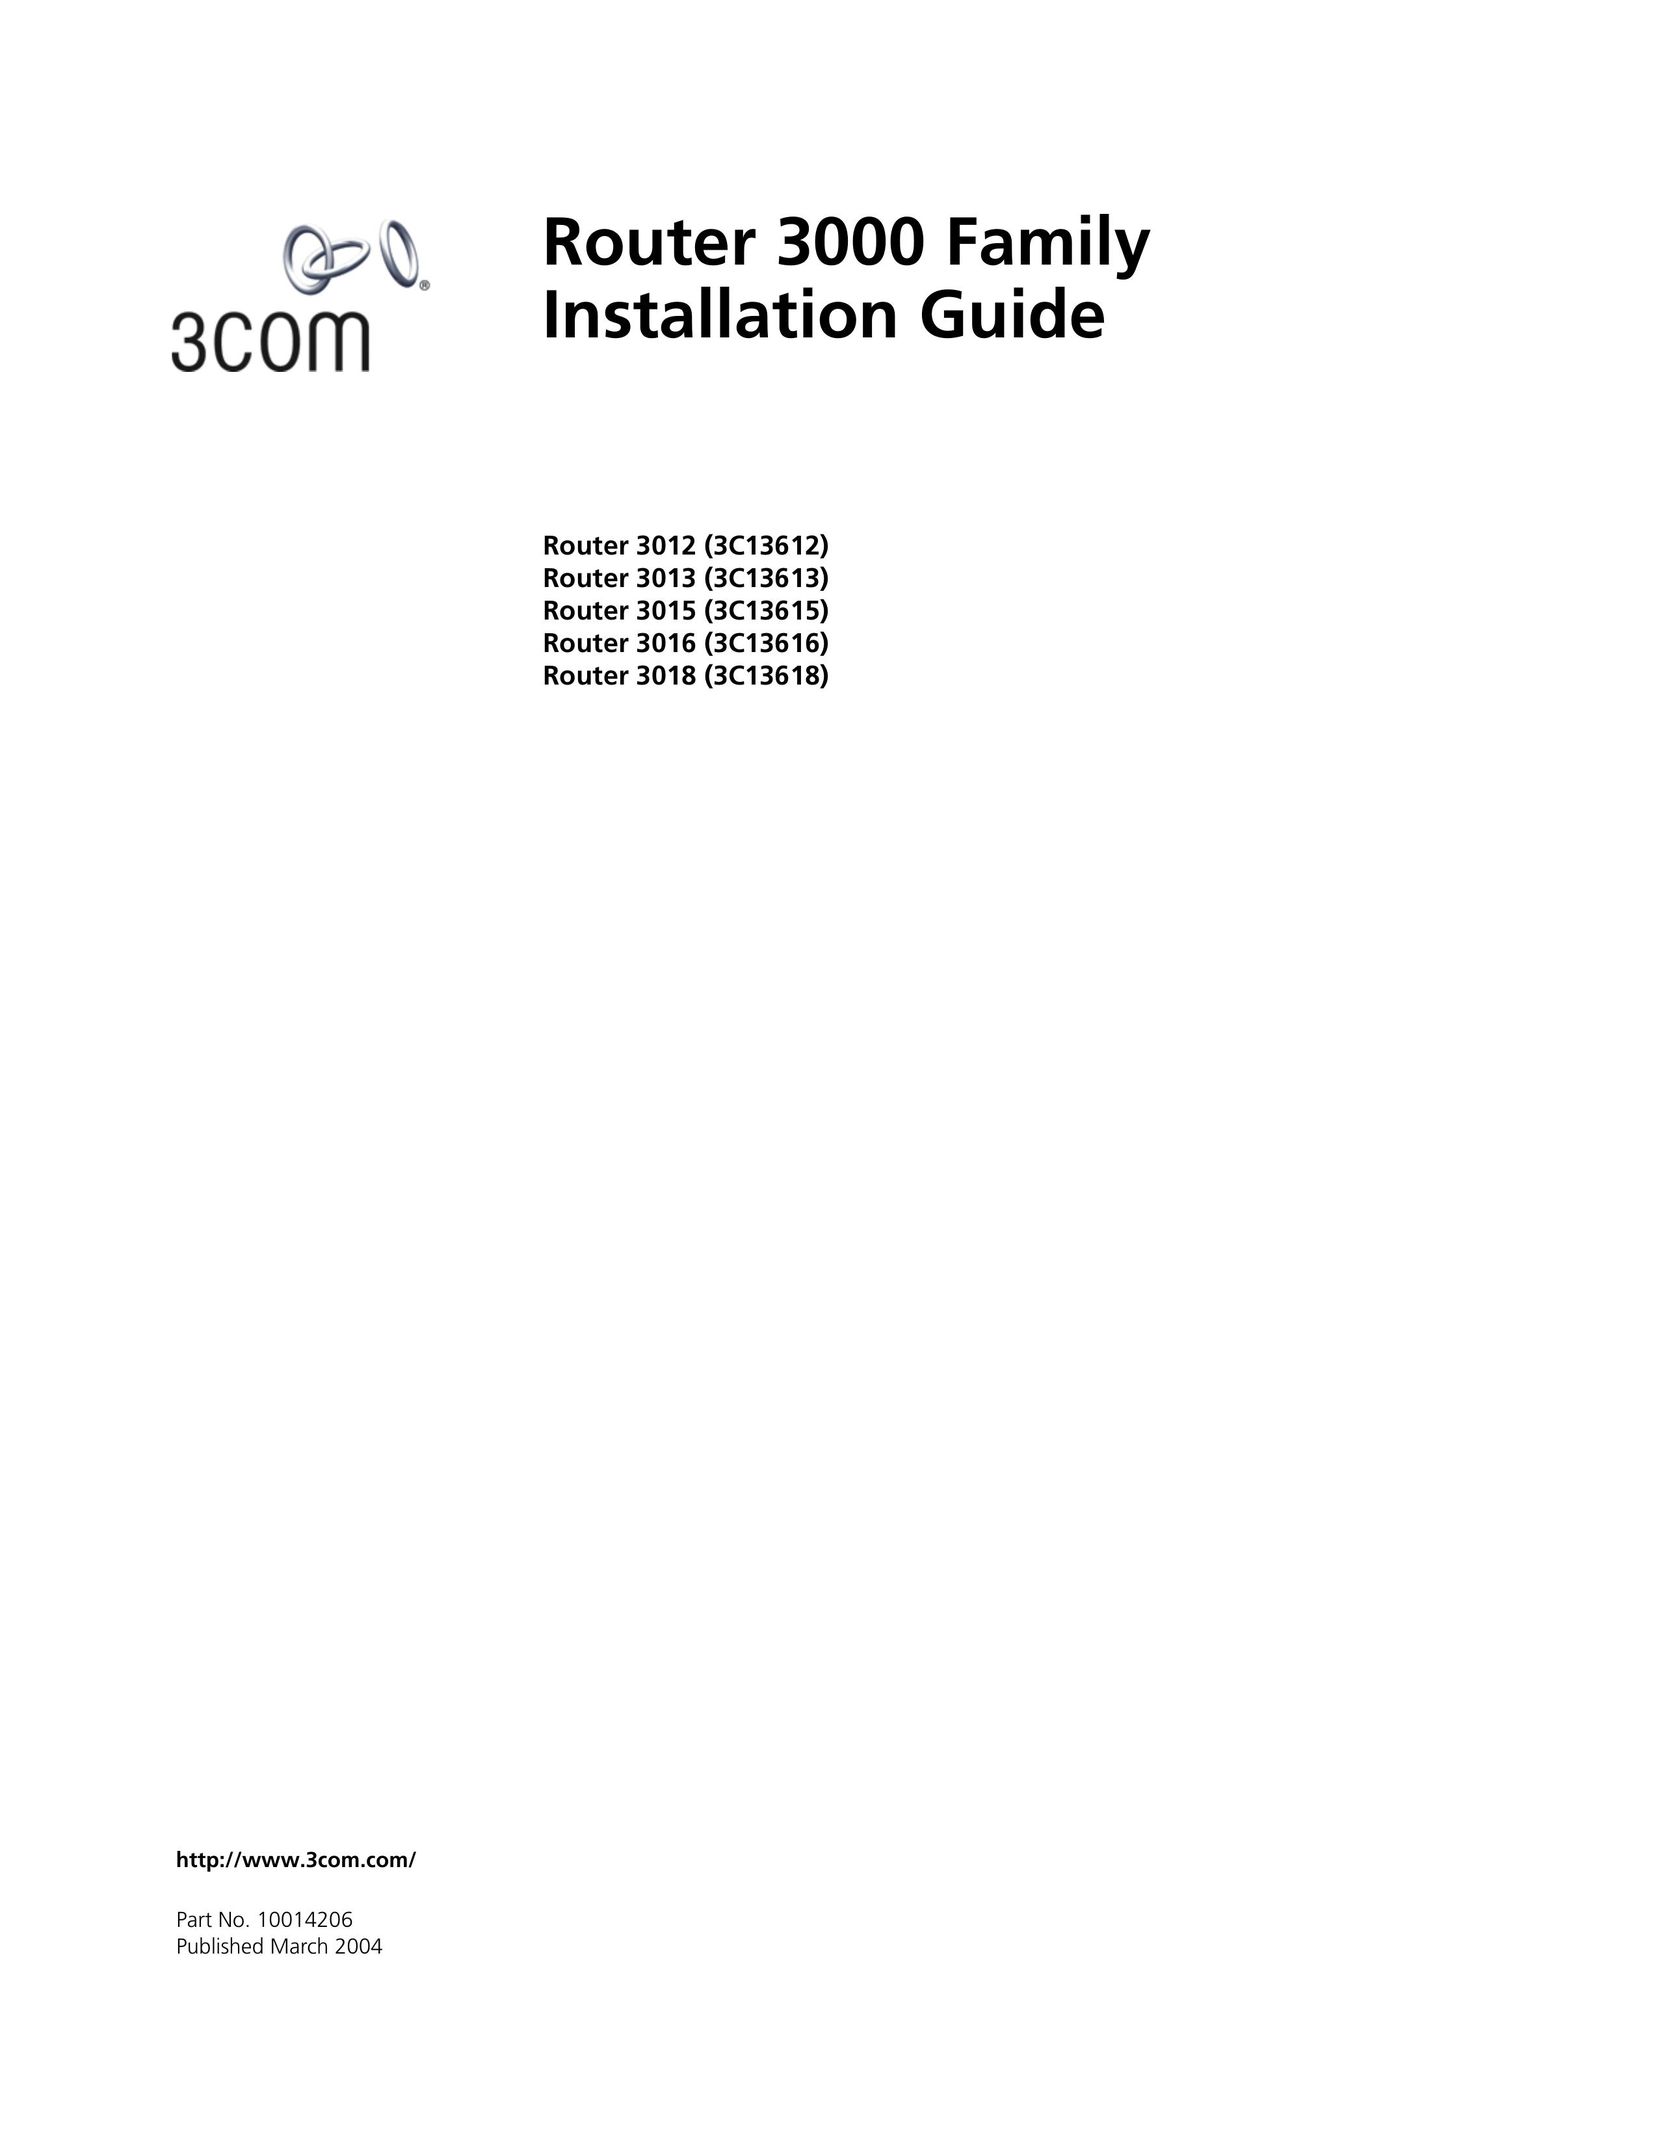 3Com 3013 (3C13613) Saw User Manual